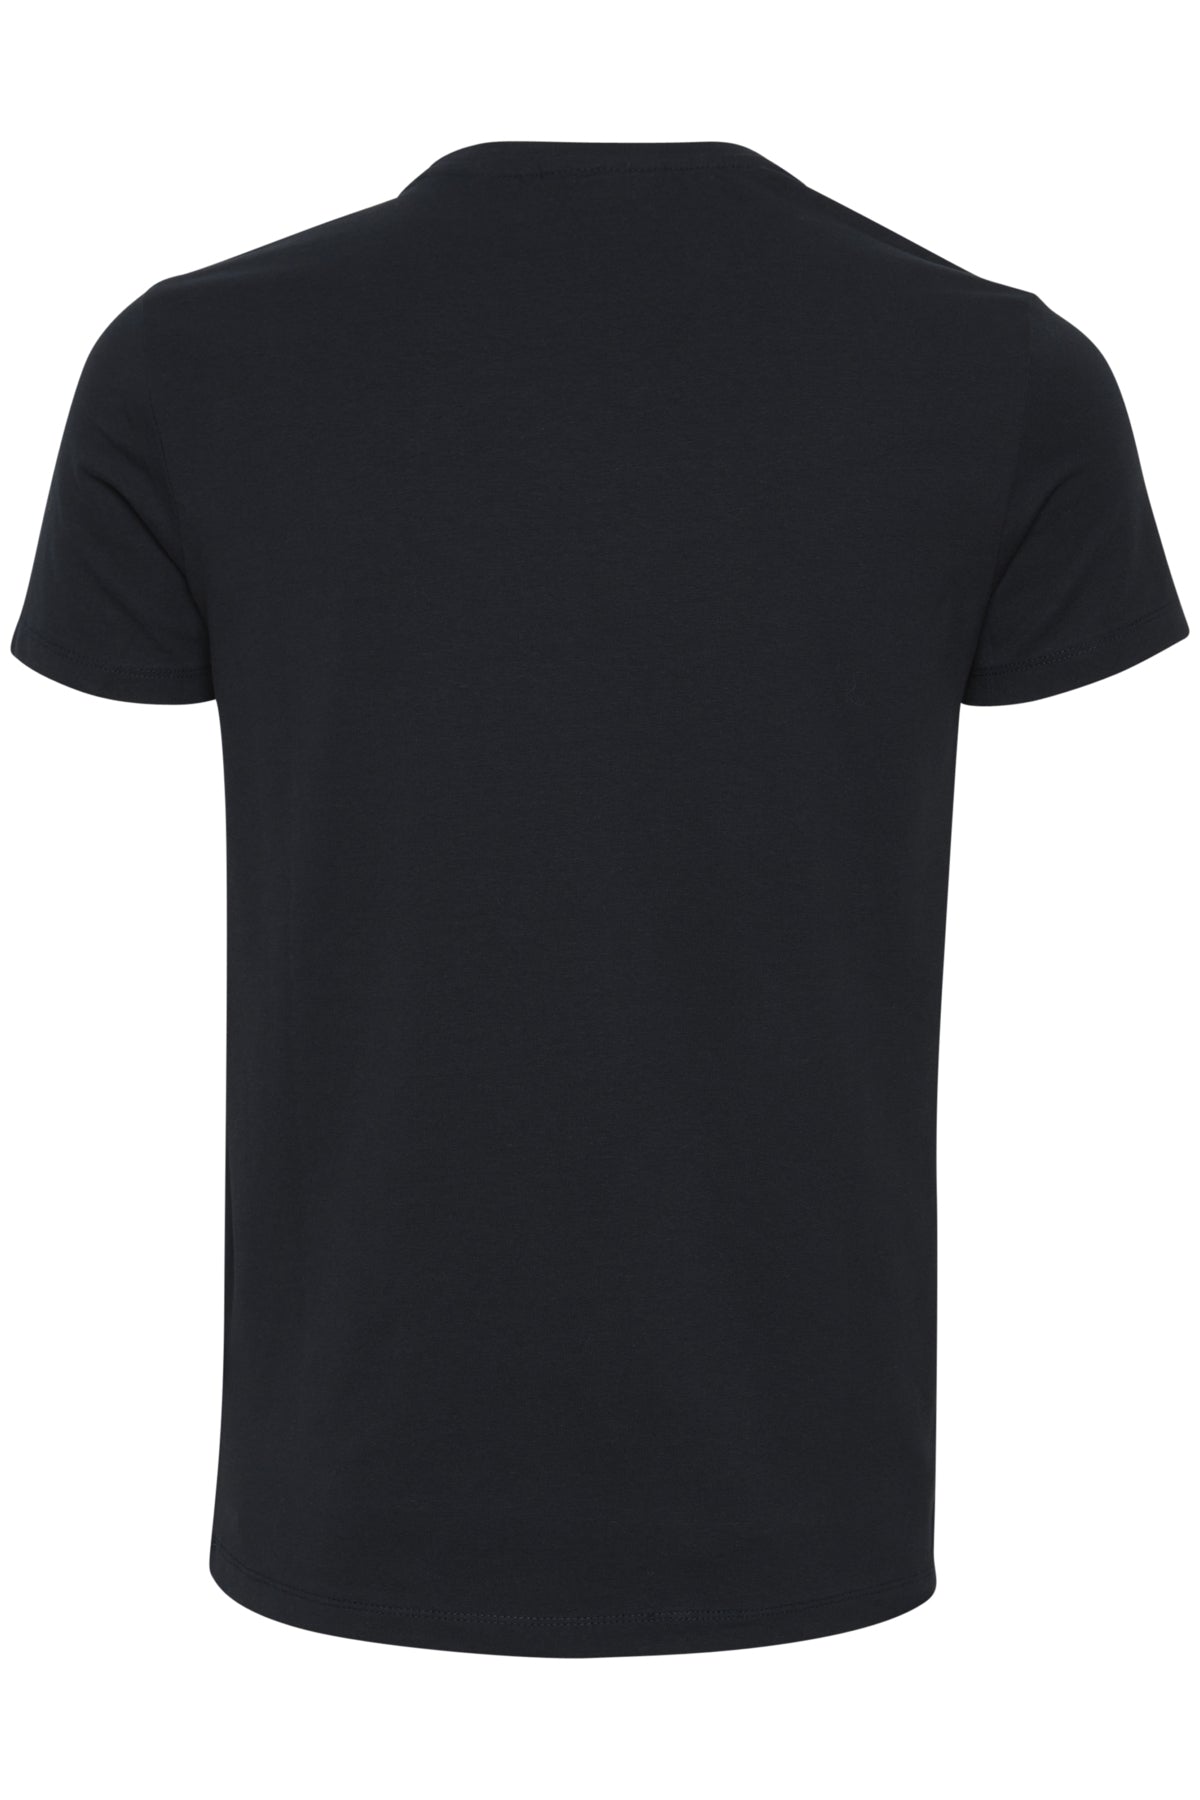 David Crew Neck T-shirt - Black - The Sons online